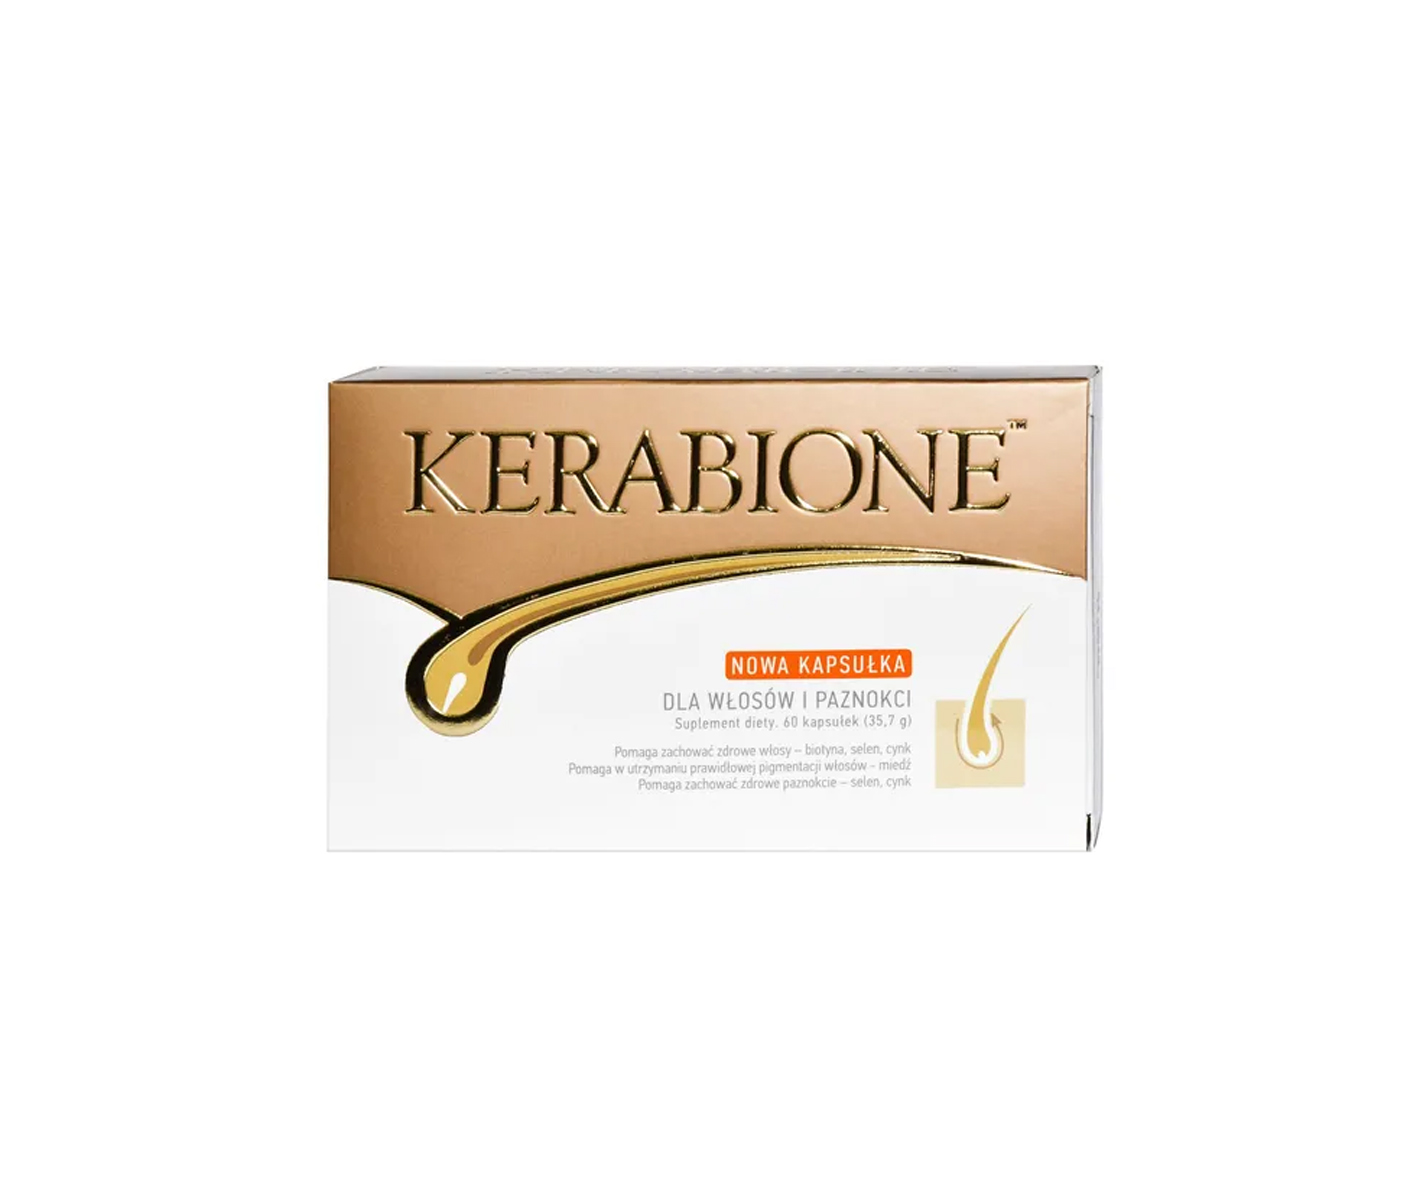 Kerabione hair tablets